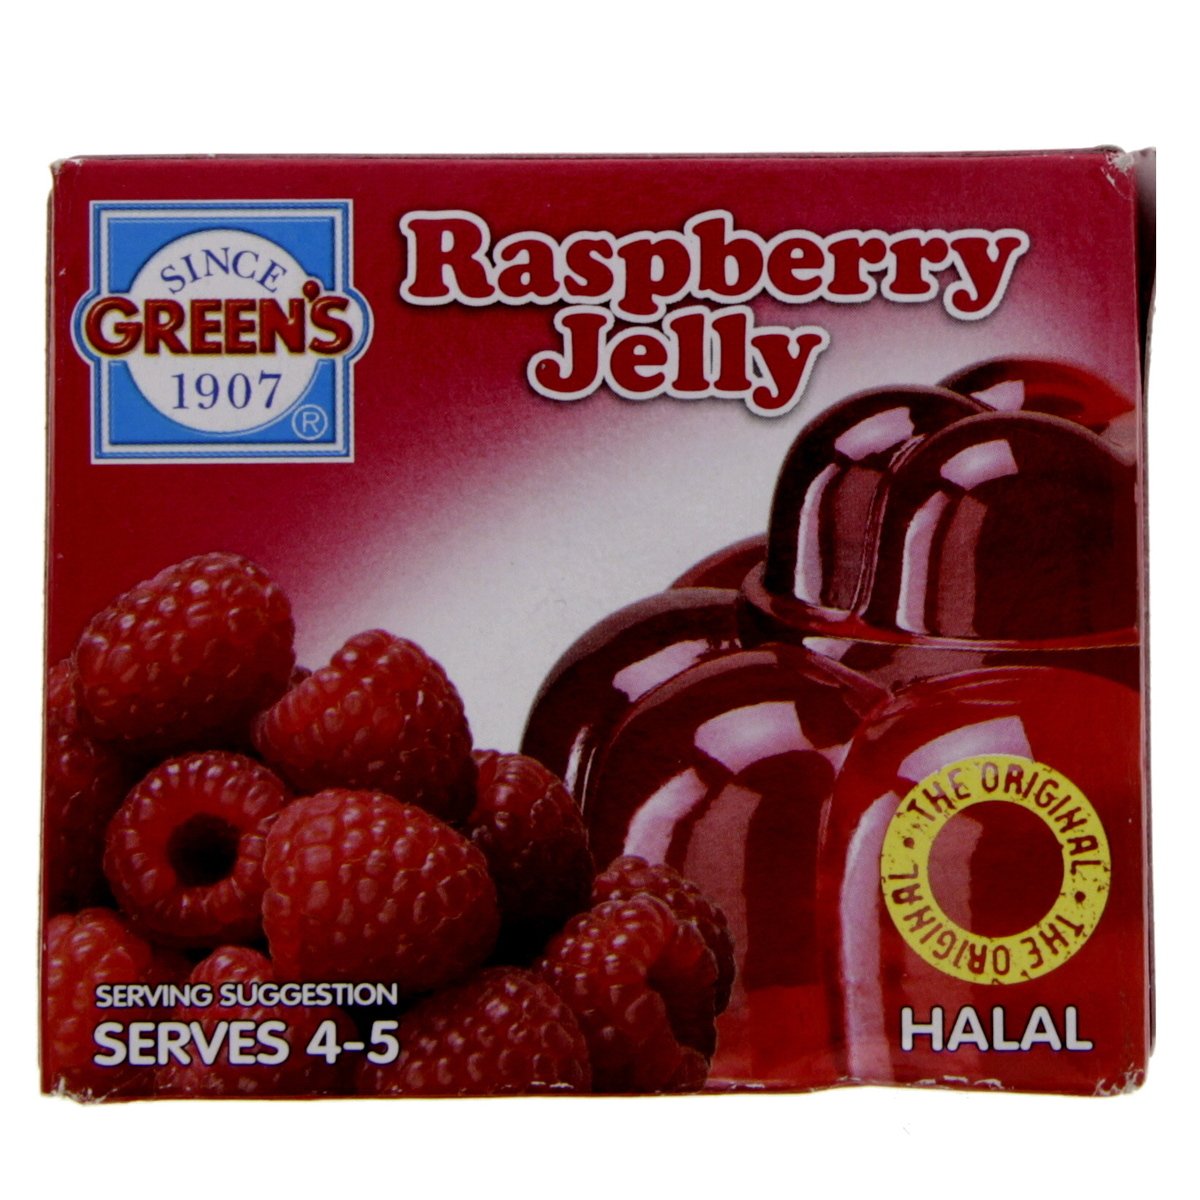 Green's Raspberry Jelly 12 x 80 g